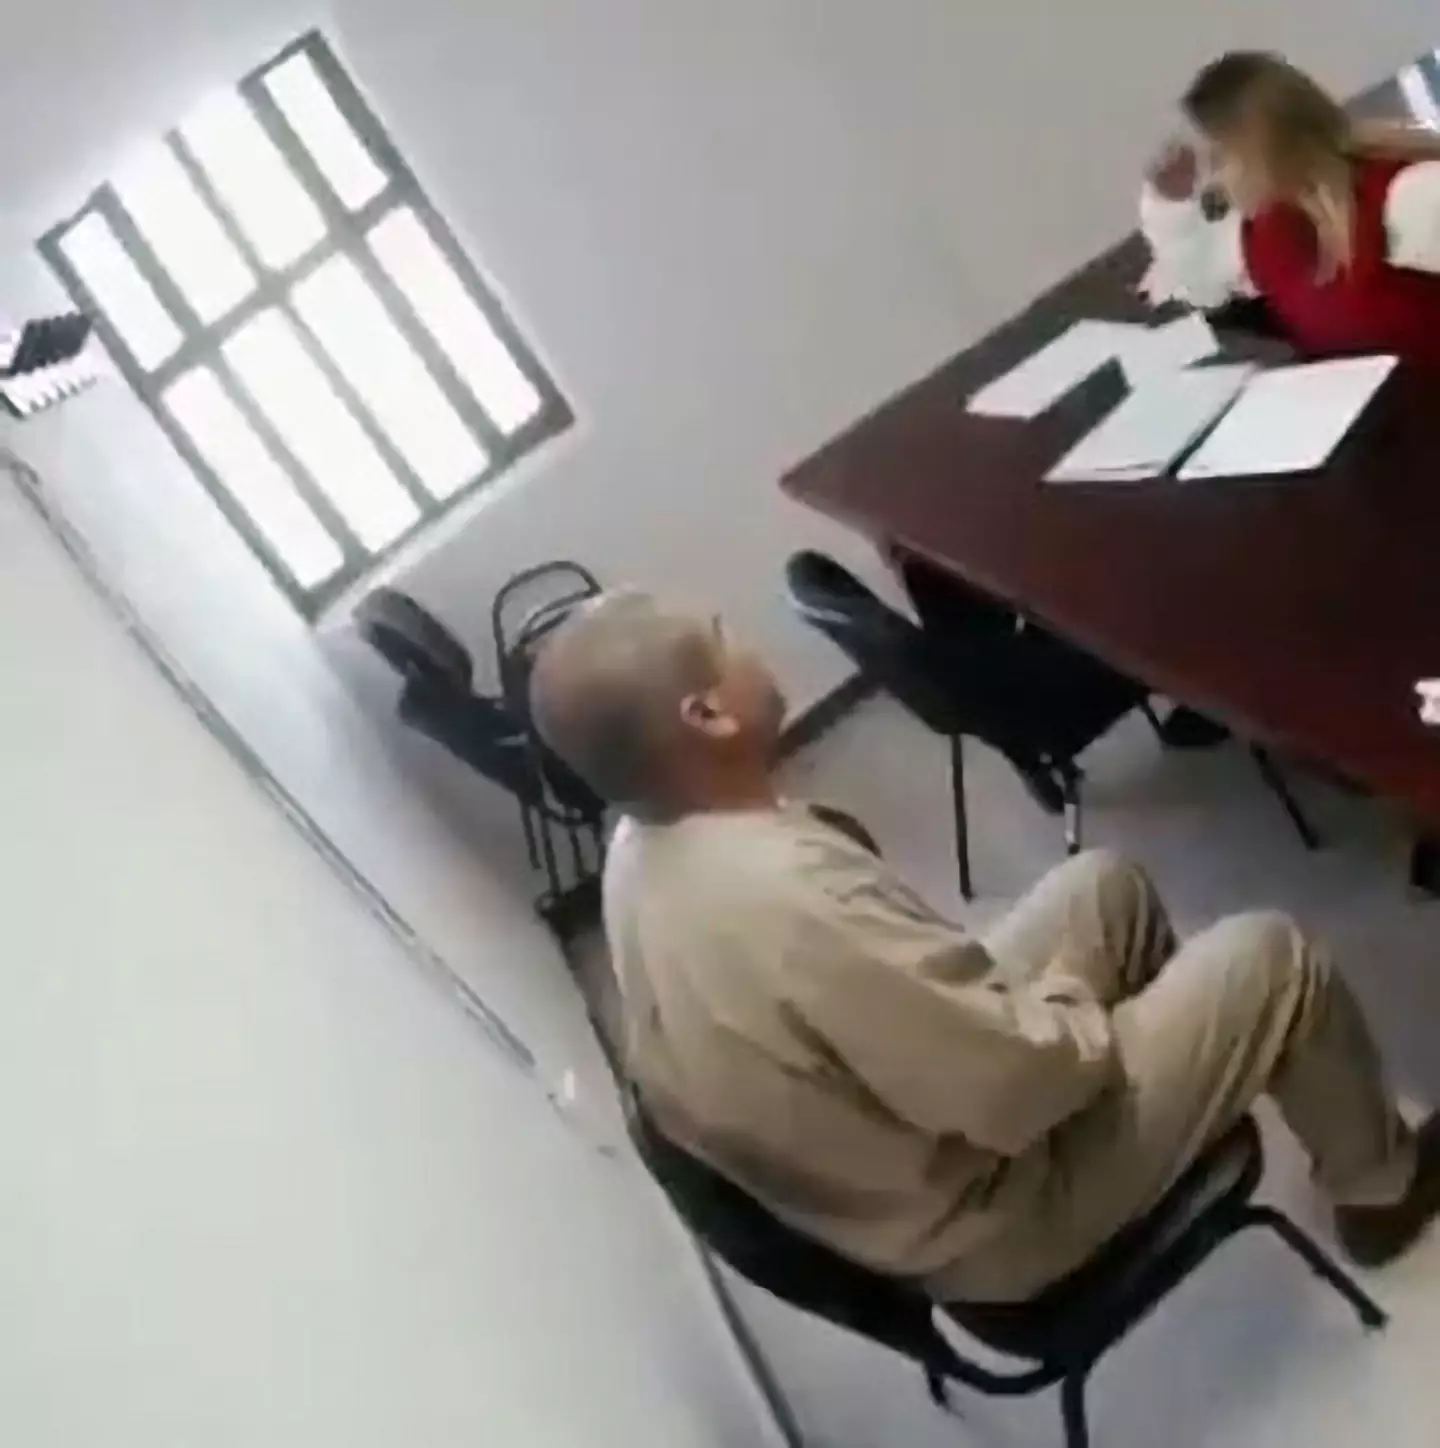 El Chapo is serving his sentence at Administrative Maximum U.S. Penitentiary.